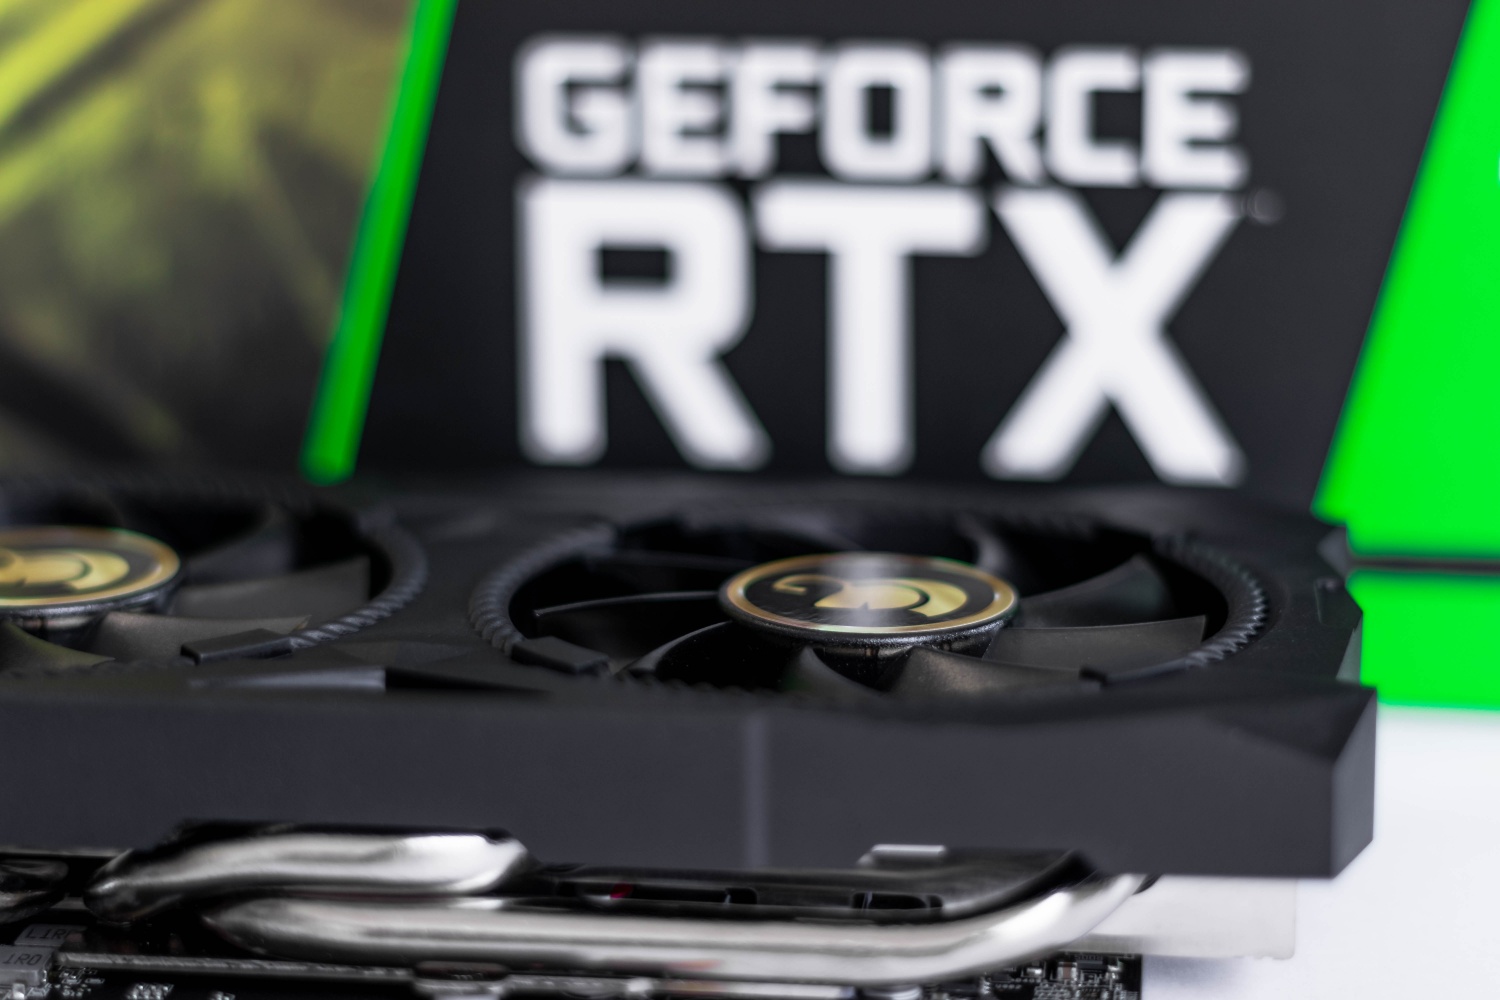 Nvidia RTX 4090 Ti: Rumored specs, performance & more - Dexerto